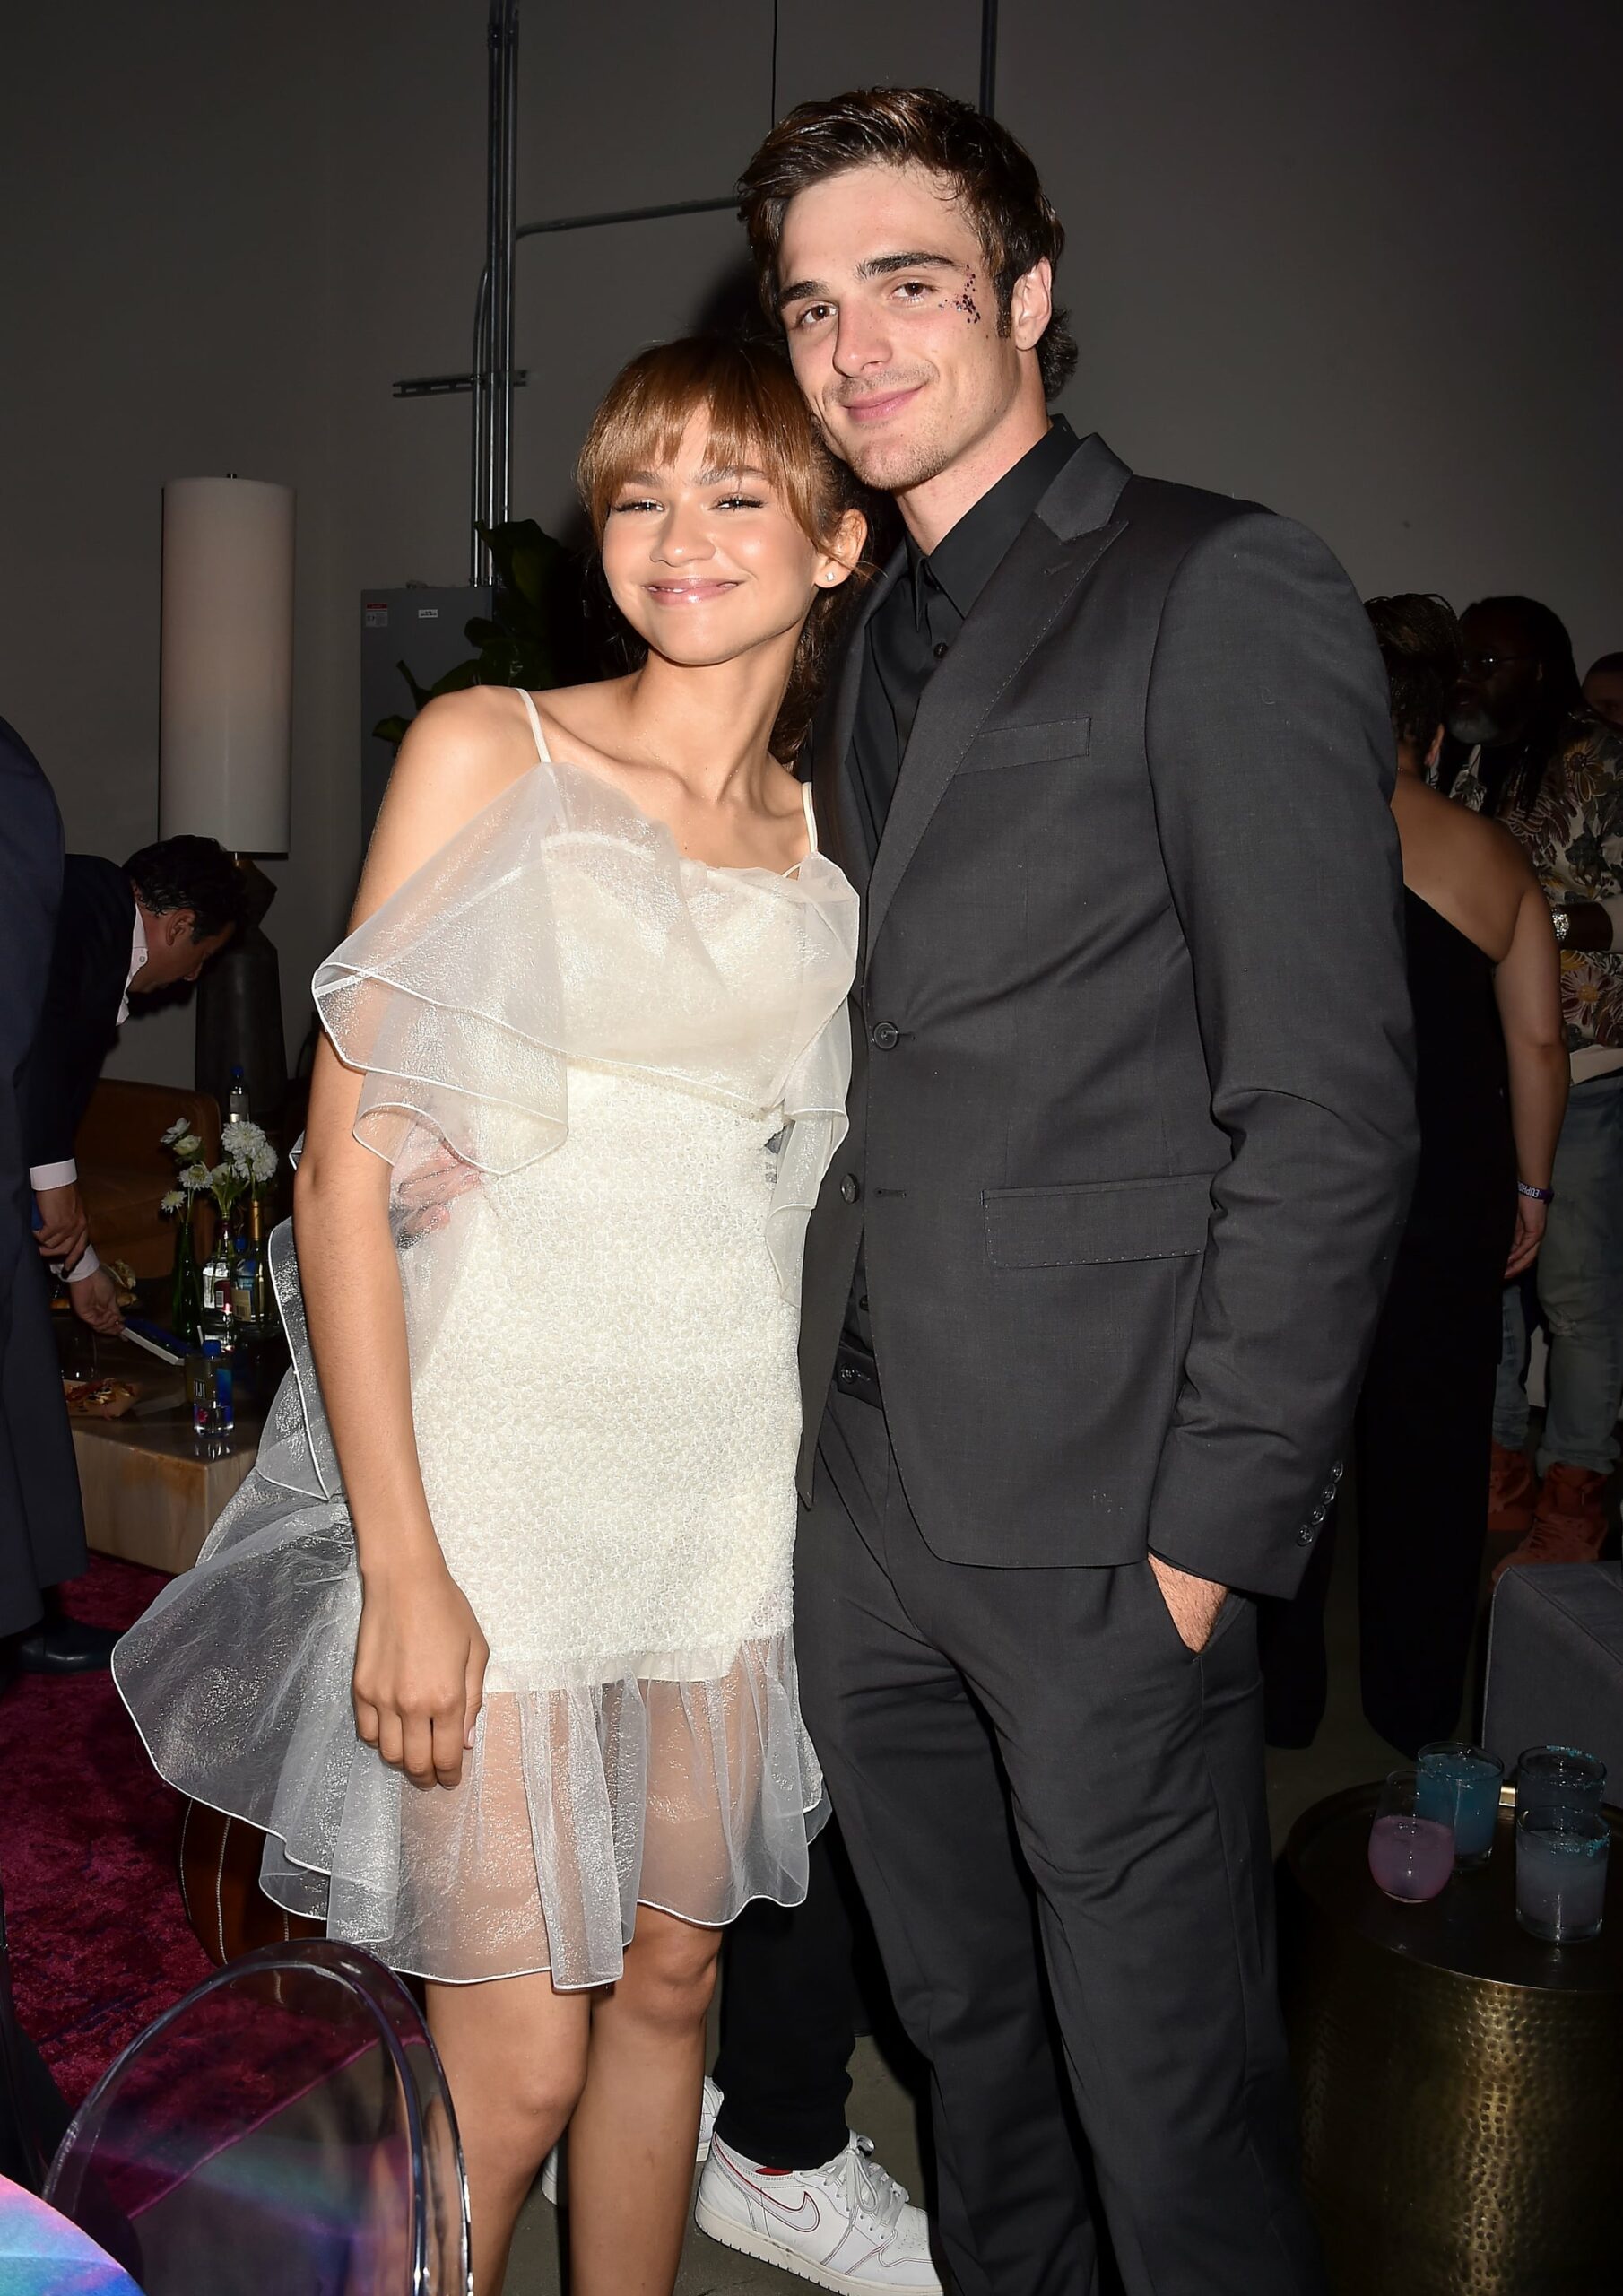 LOS ANGELES, CALIFORNIA - JUNE 04: Zendaya and Jacob Elordi attend HBO